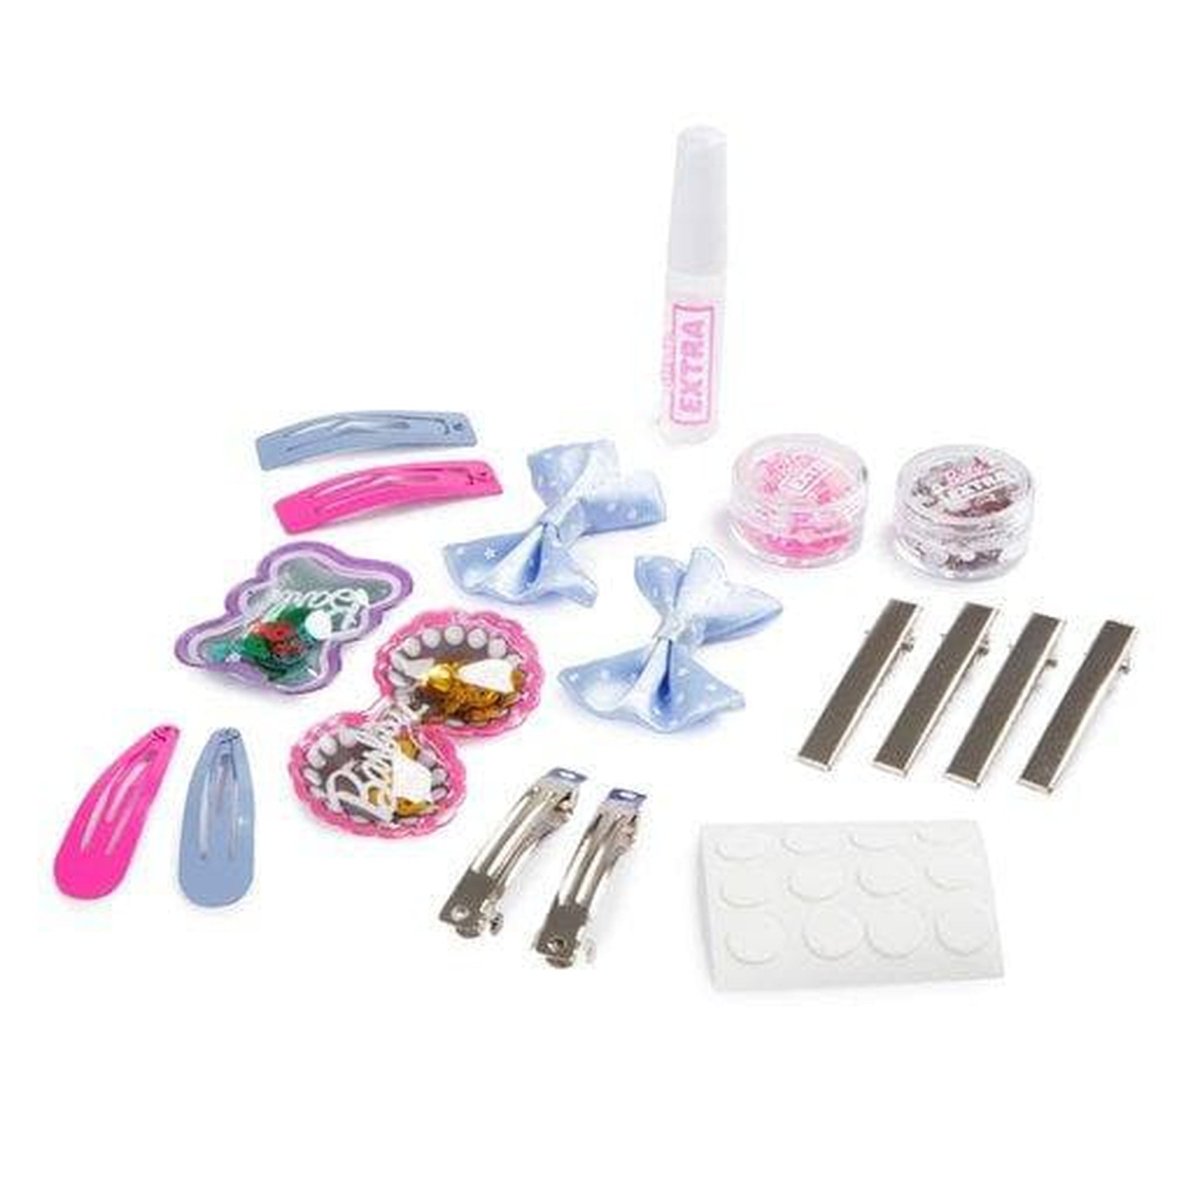 Barbie Hair Accessory Design Set - Kids Party Craft